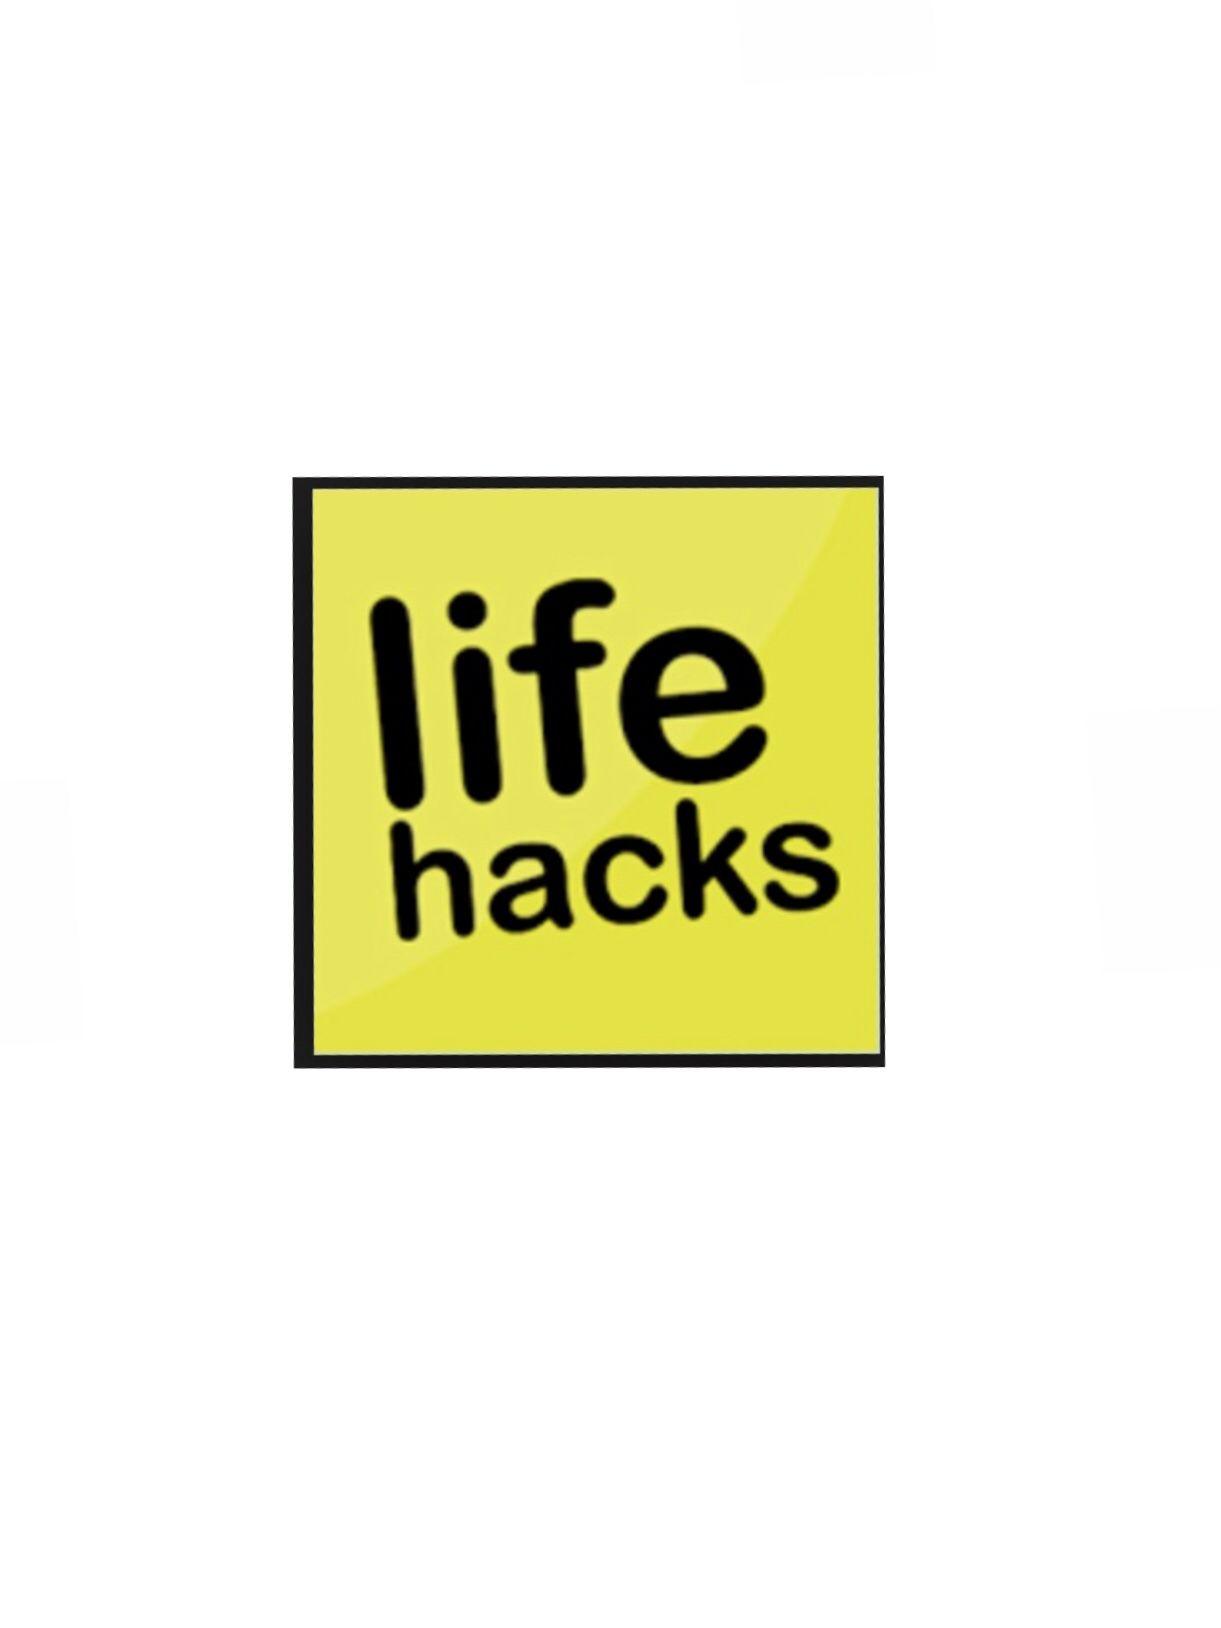 Hack Logo - Life hacks logo | Hack It Up | 1000 life hacks, Life hacks, Bad life